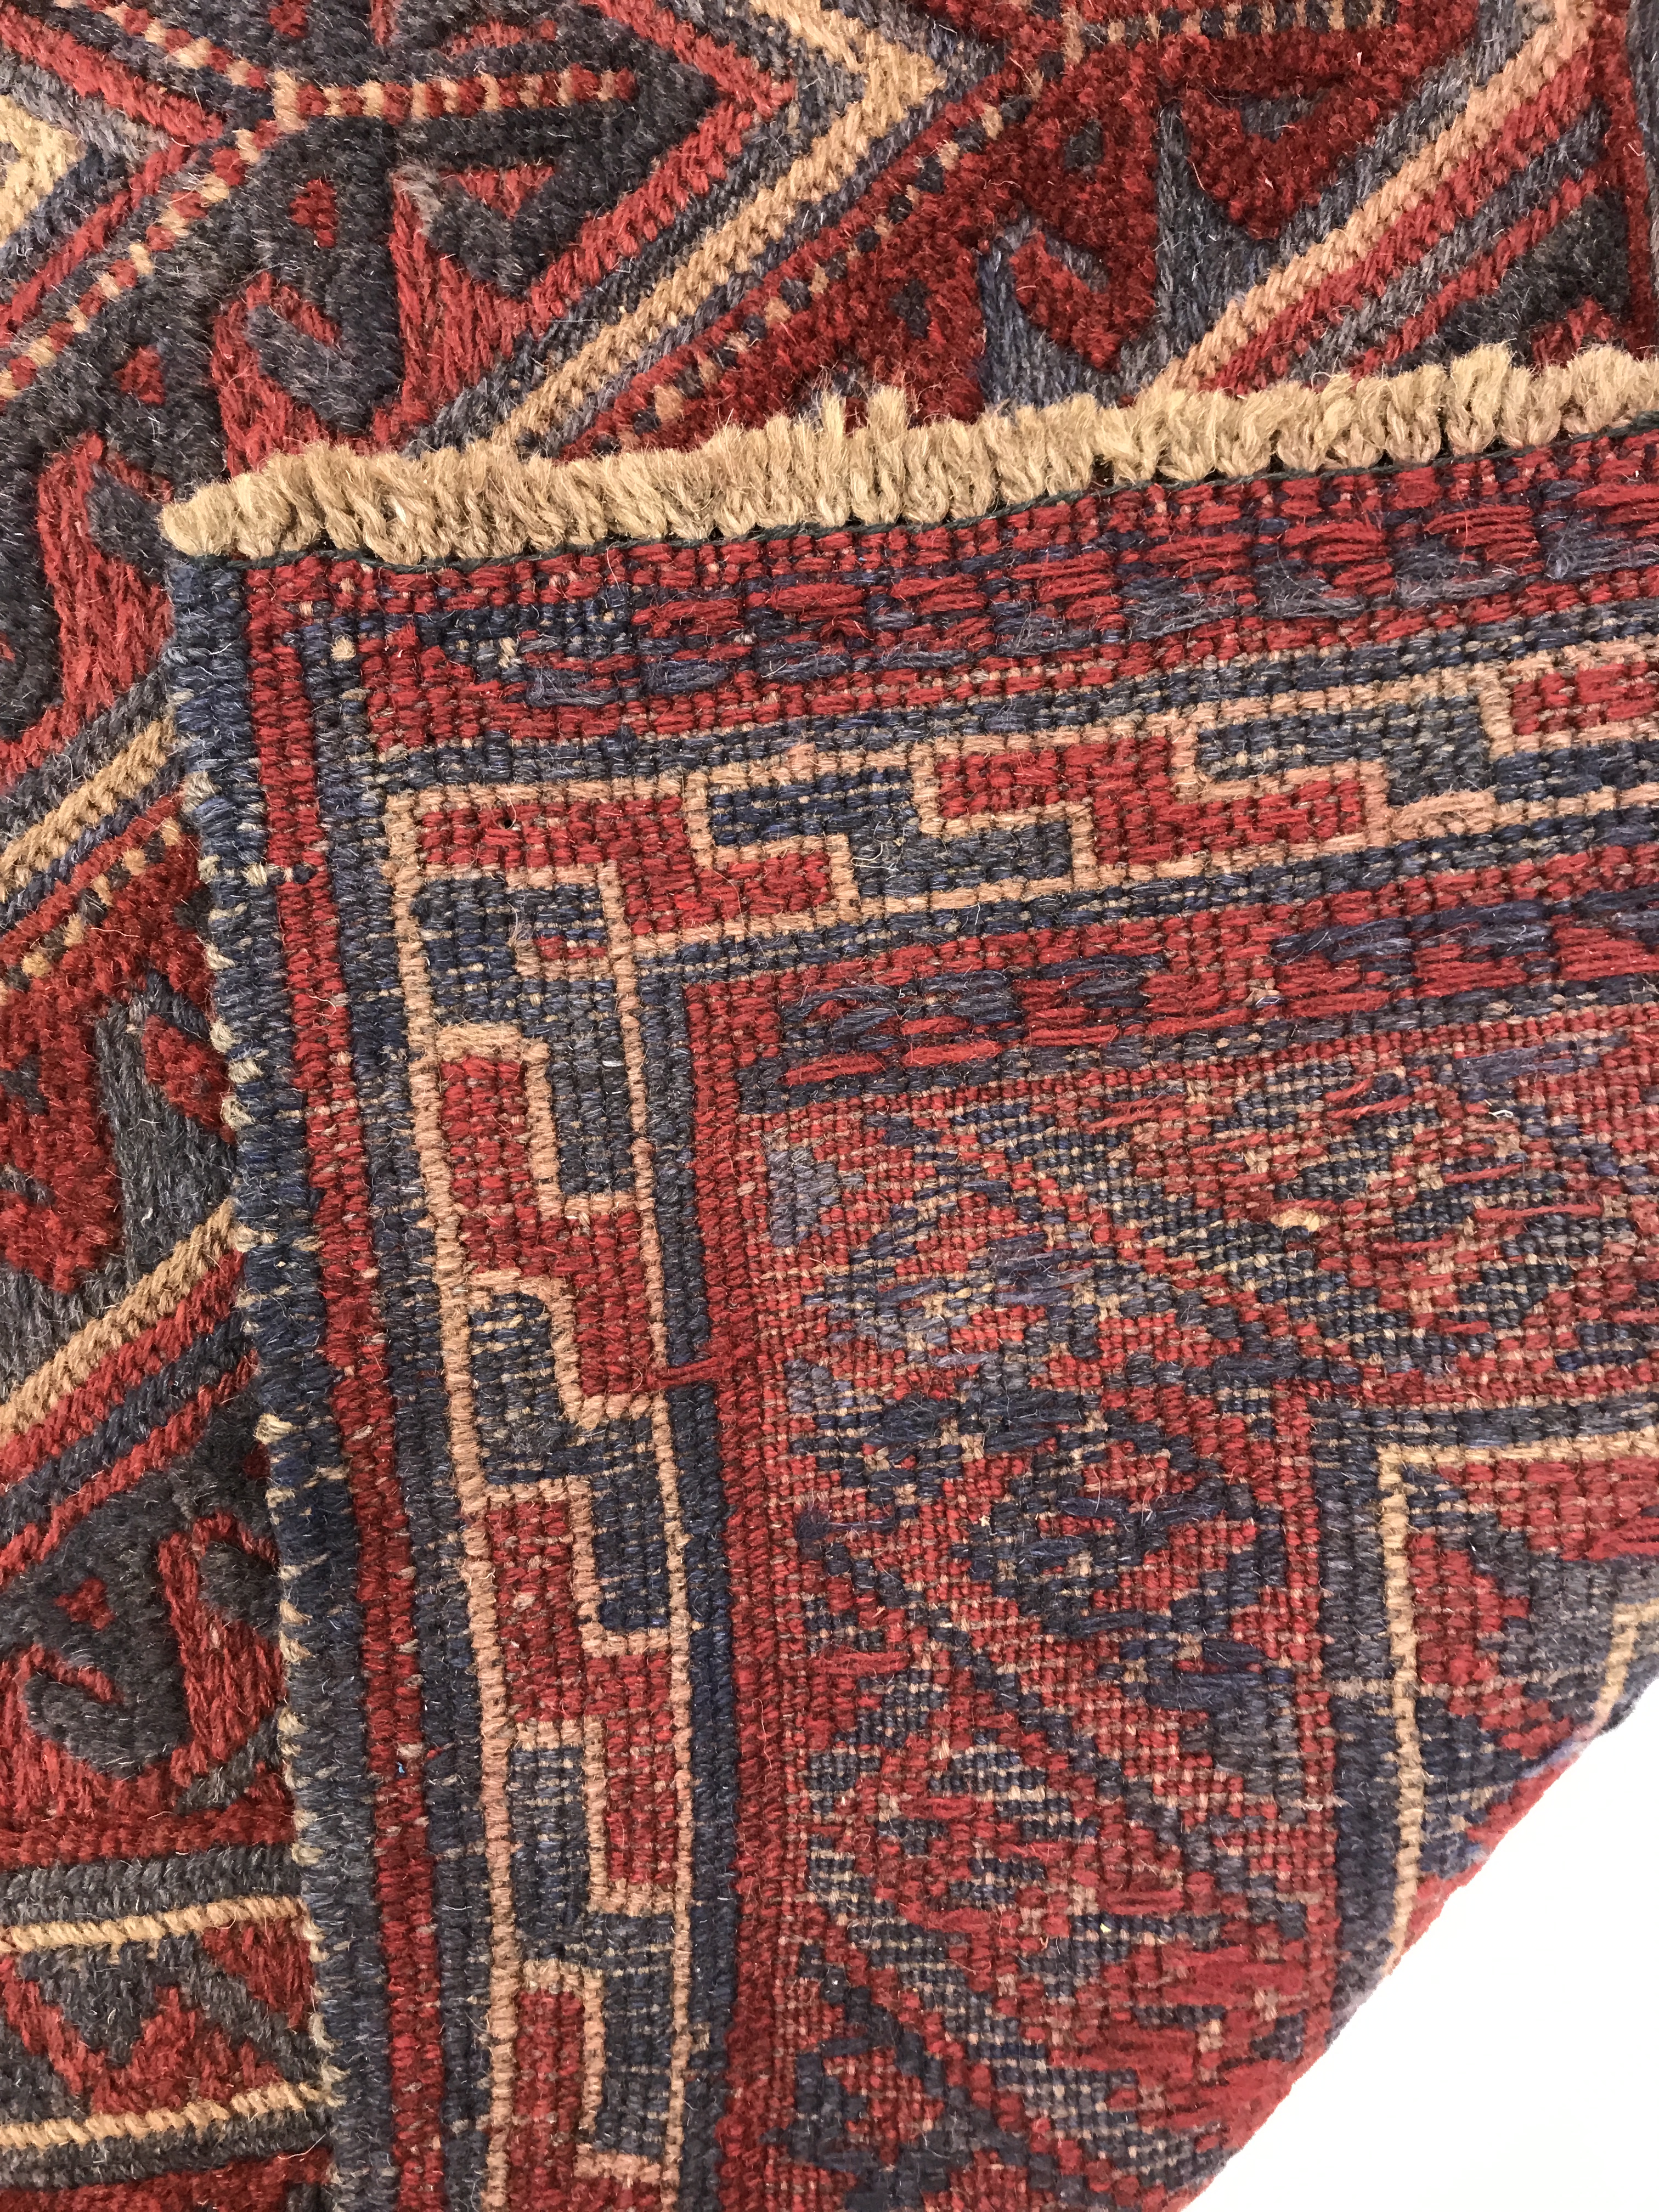 Gazak red and blue ground rug, central medallion, 120cm x 114cm - Image 6 of 6